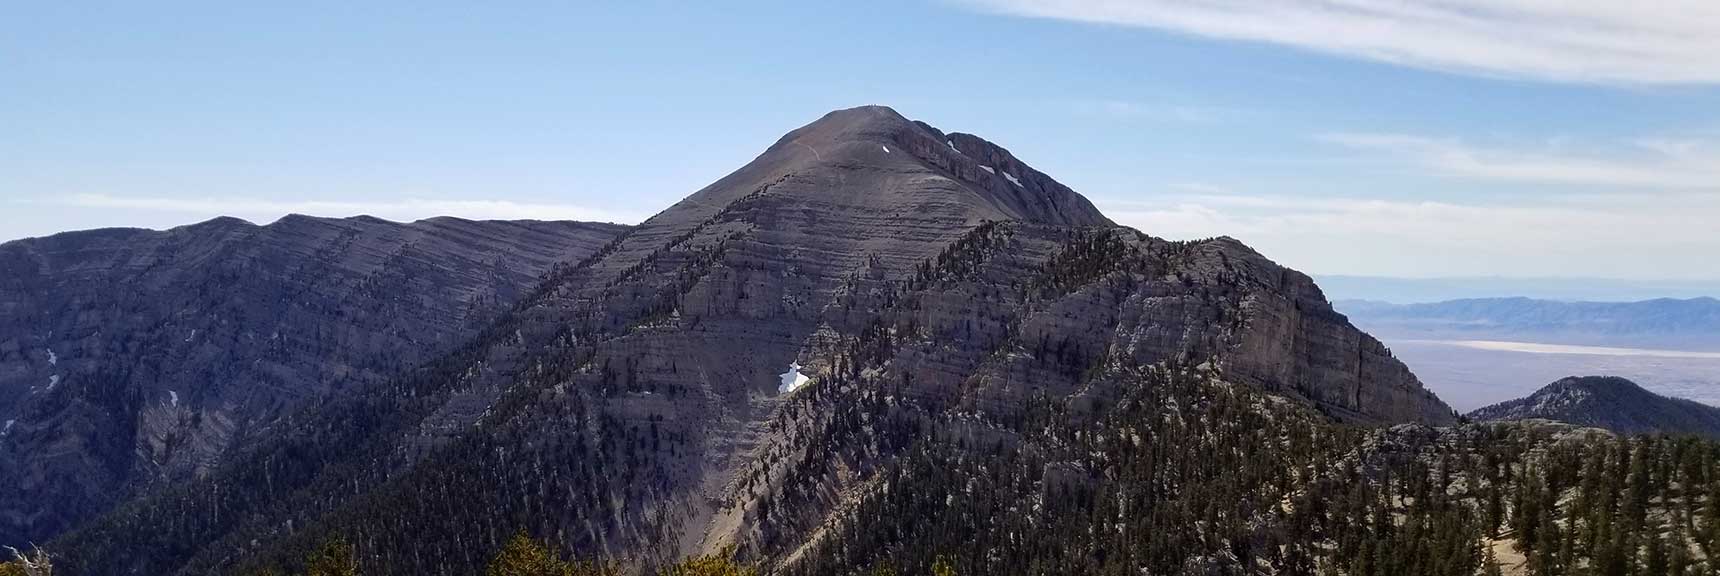 Charleston Peak Viewed from Lee Peak in Kyle Canyon, Spring Mountains, Nevada Slide 001